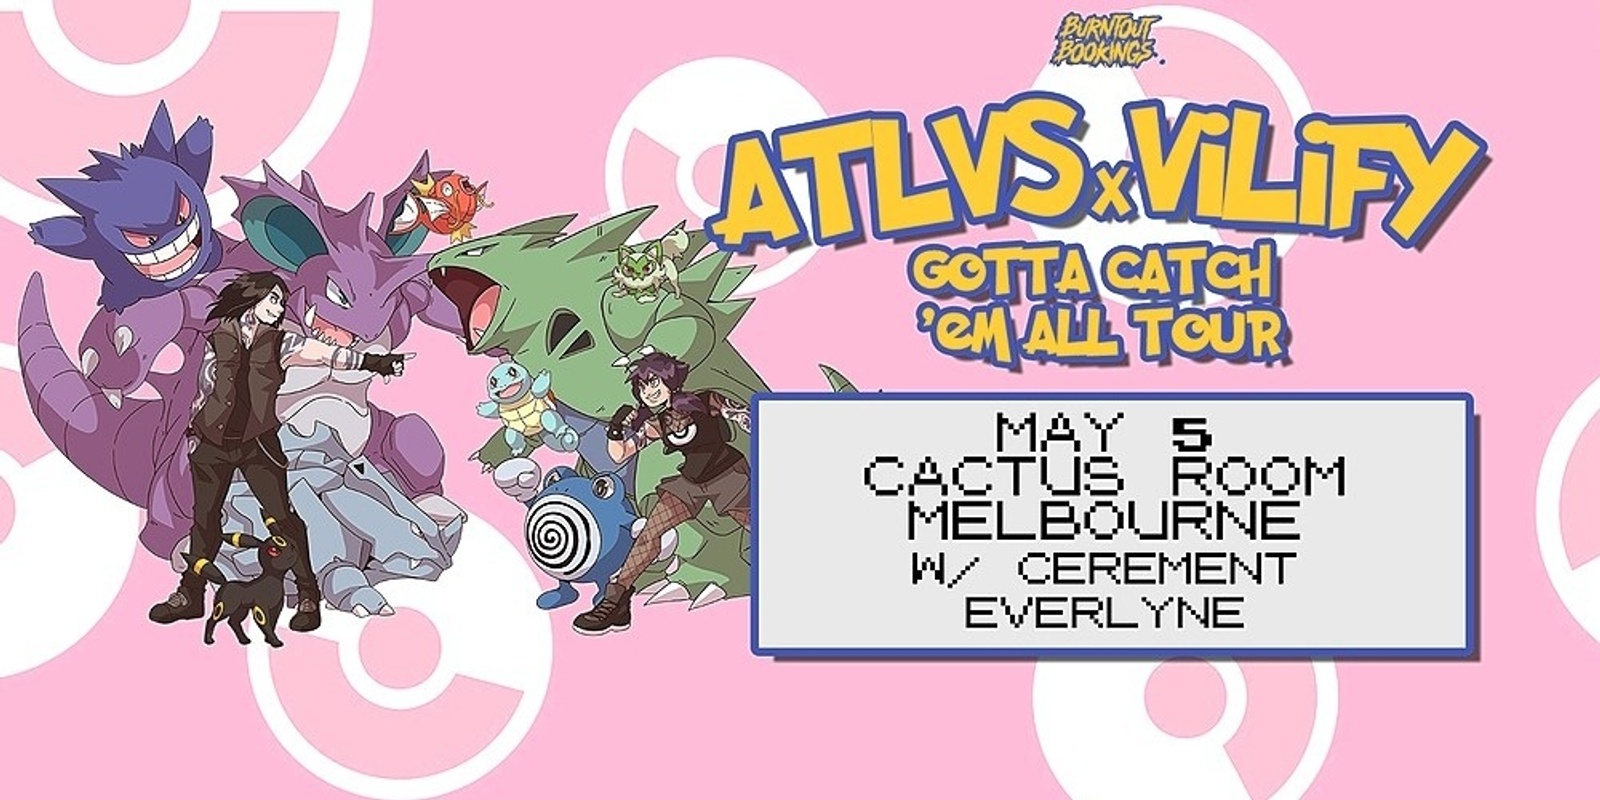 Banner image for ATLVSxVILIFY The Gotta Catch 'em All Tour